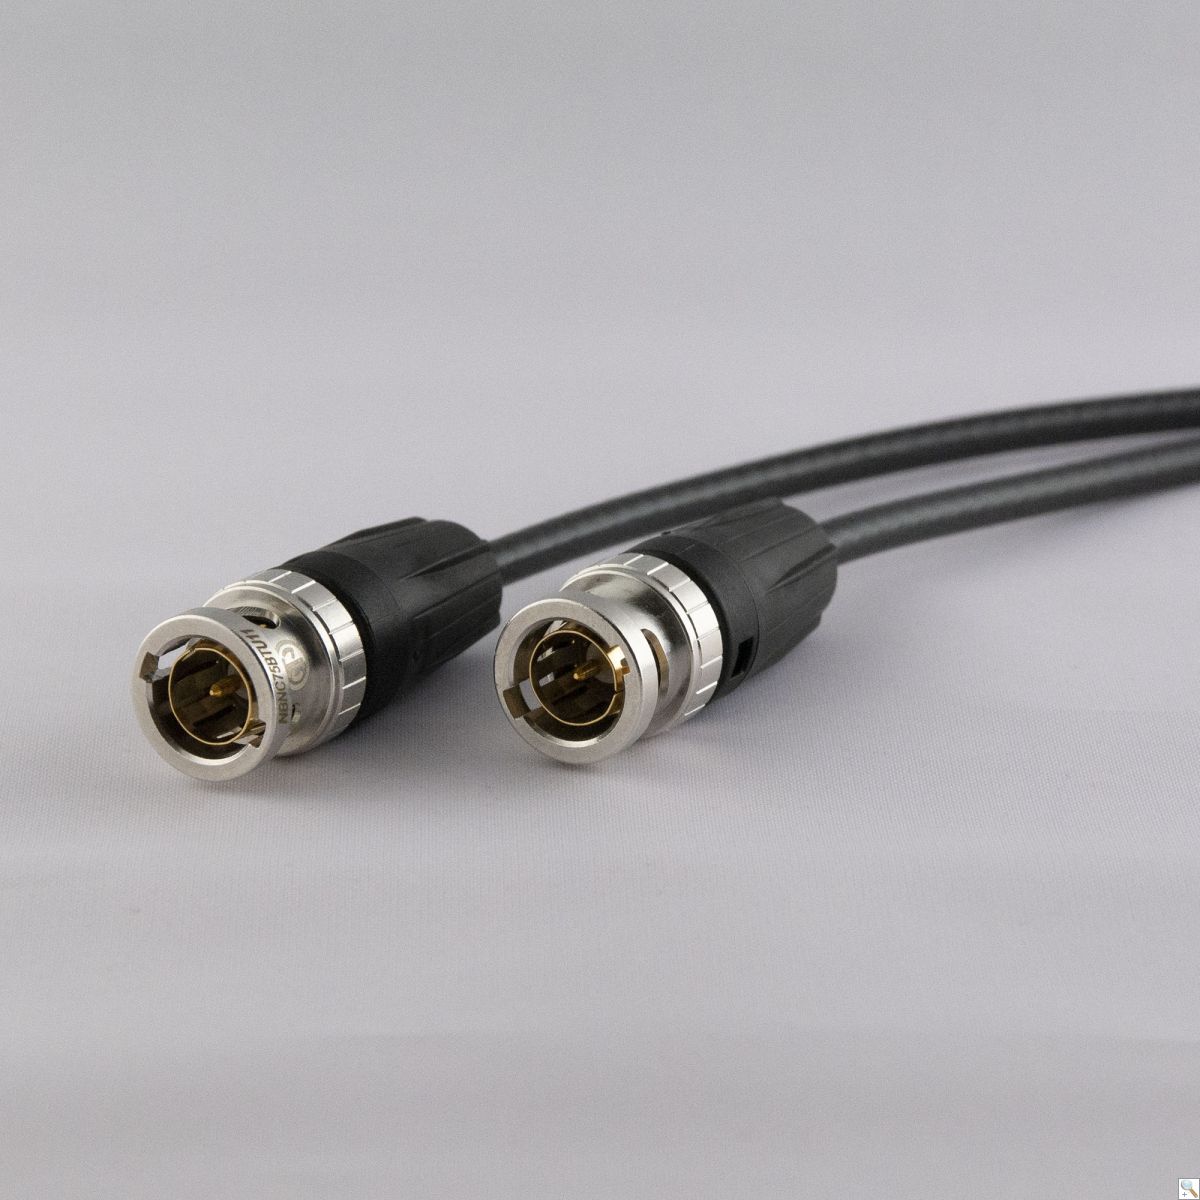 Neutrik rear Twist HD BNC Cable assembly - Belden 1855A